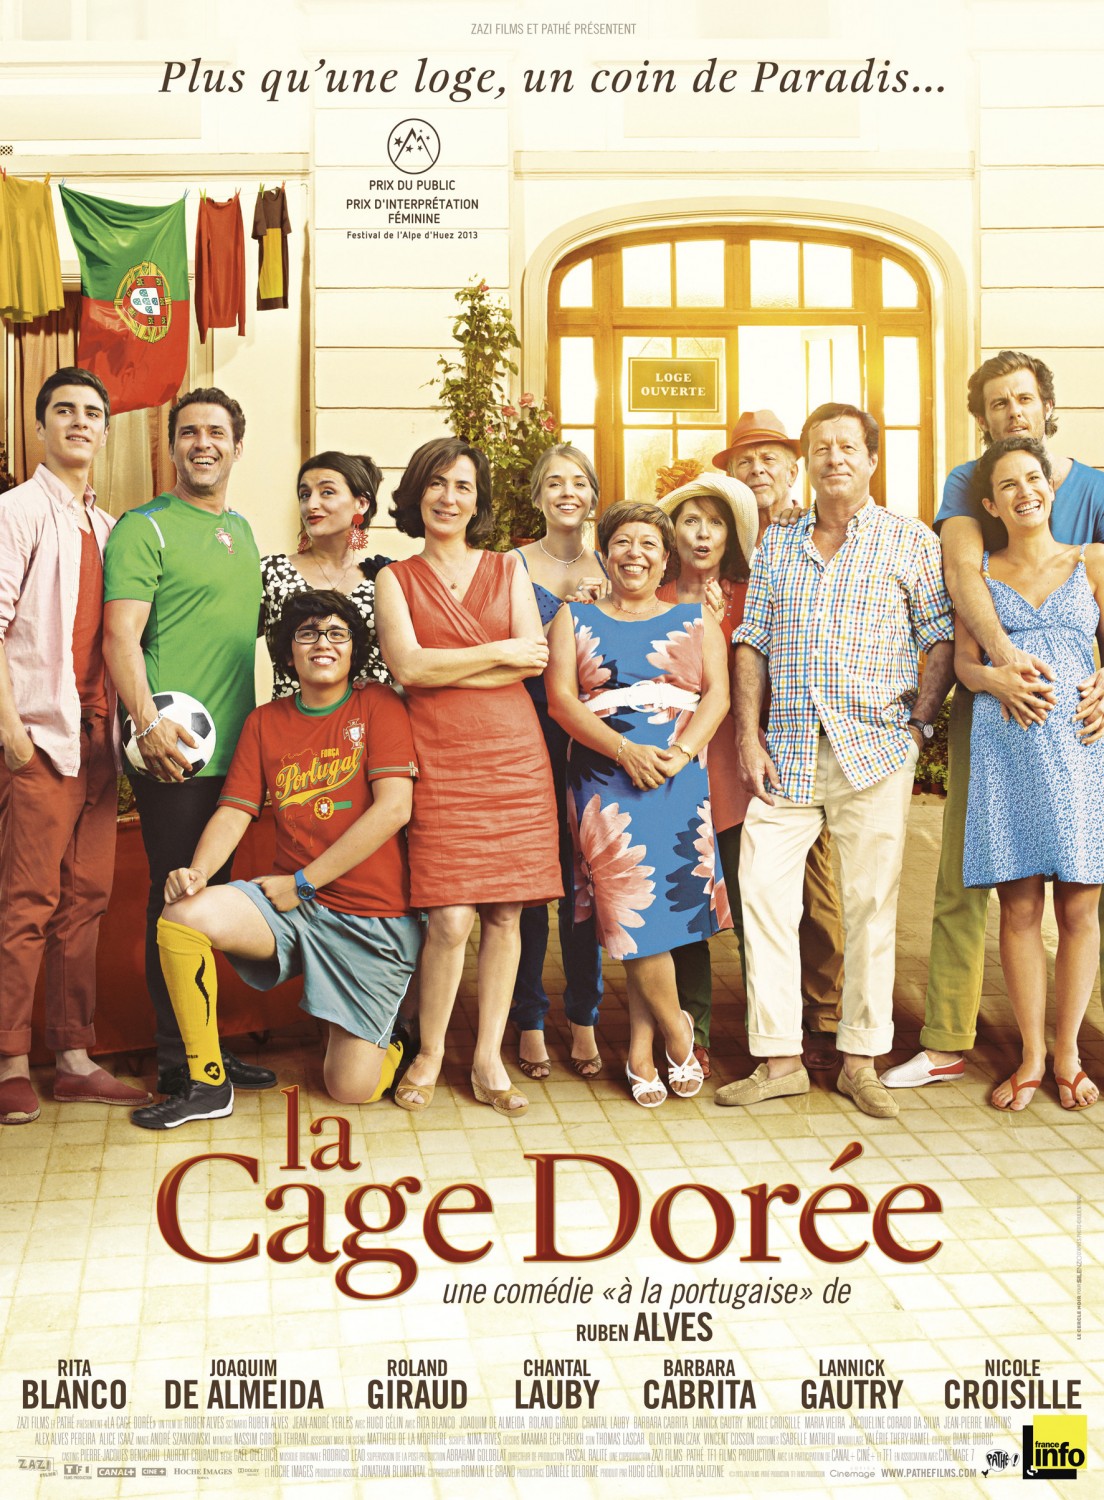 Extra Large Movie Poster Image for La cage dorée 